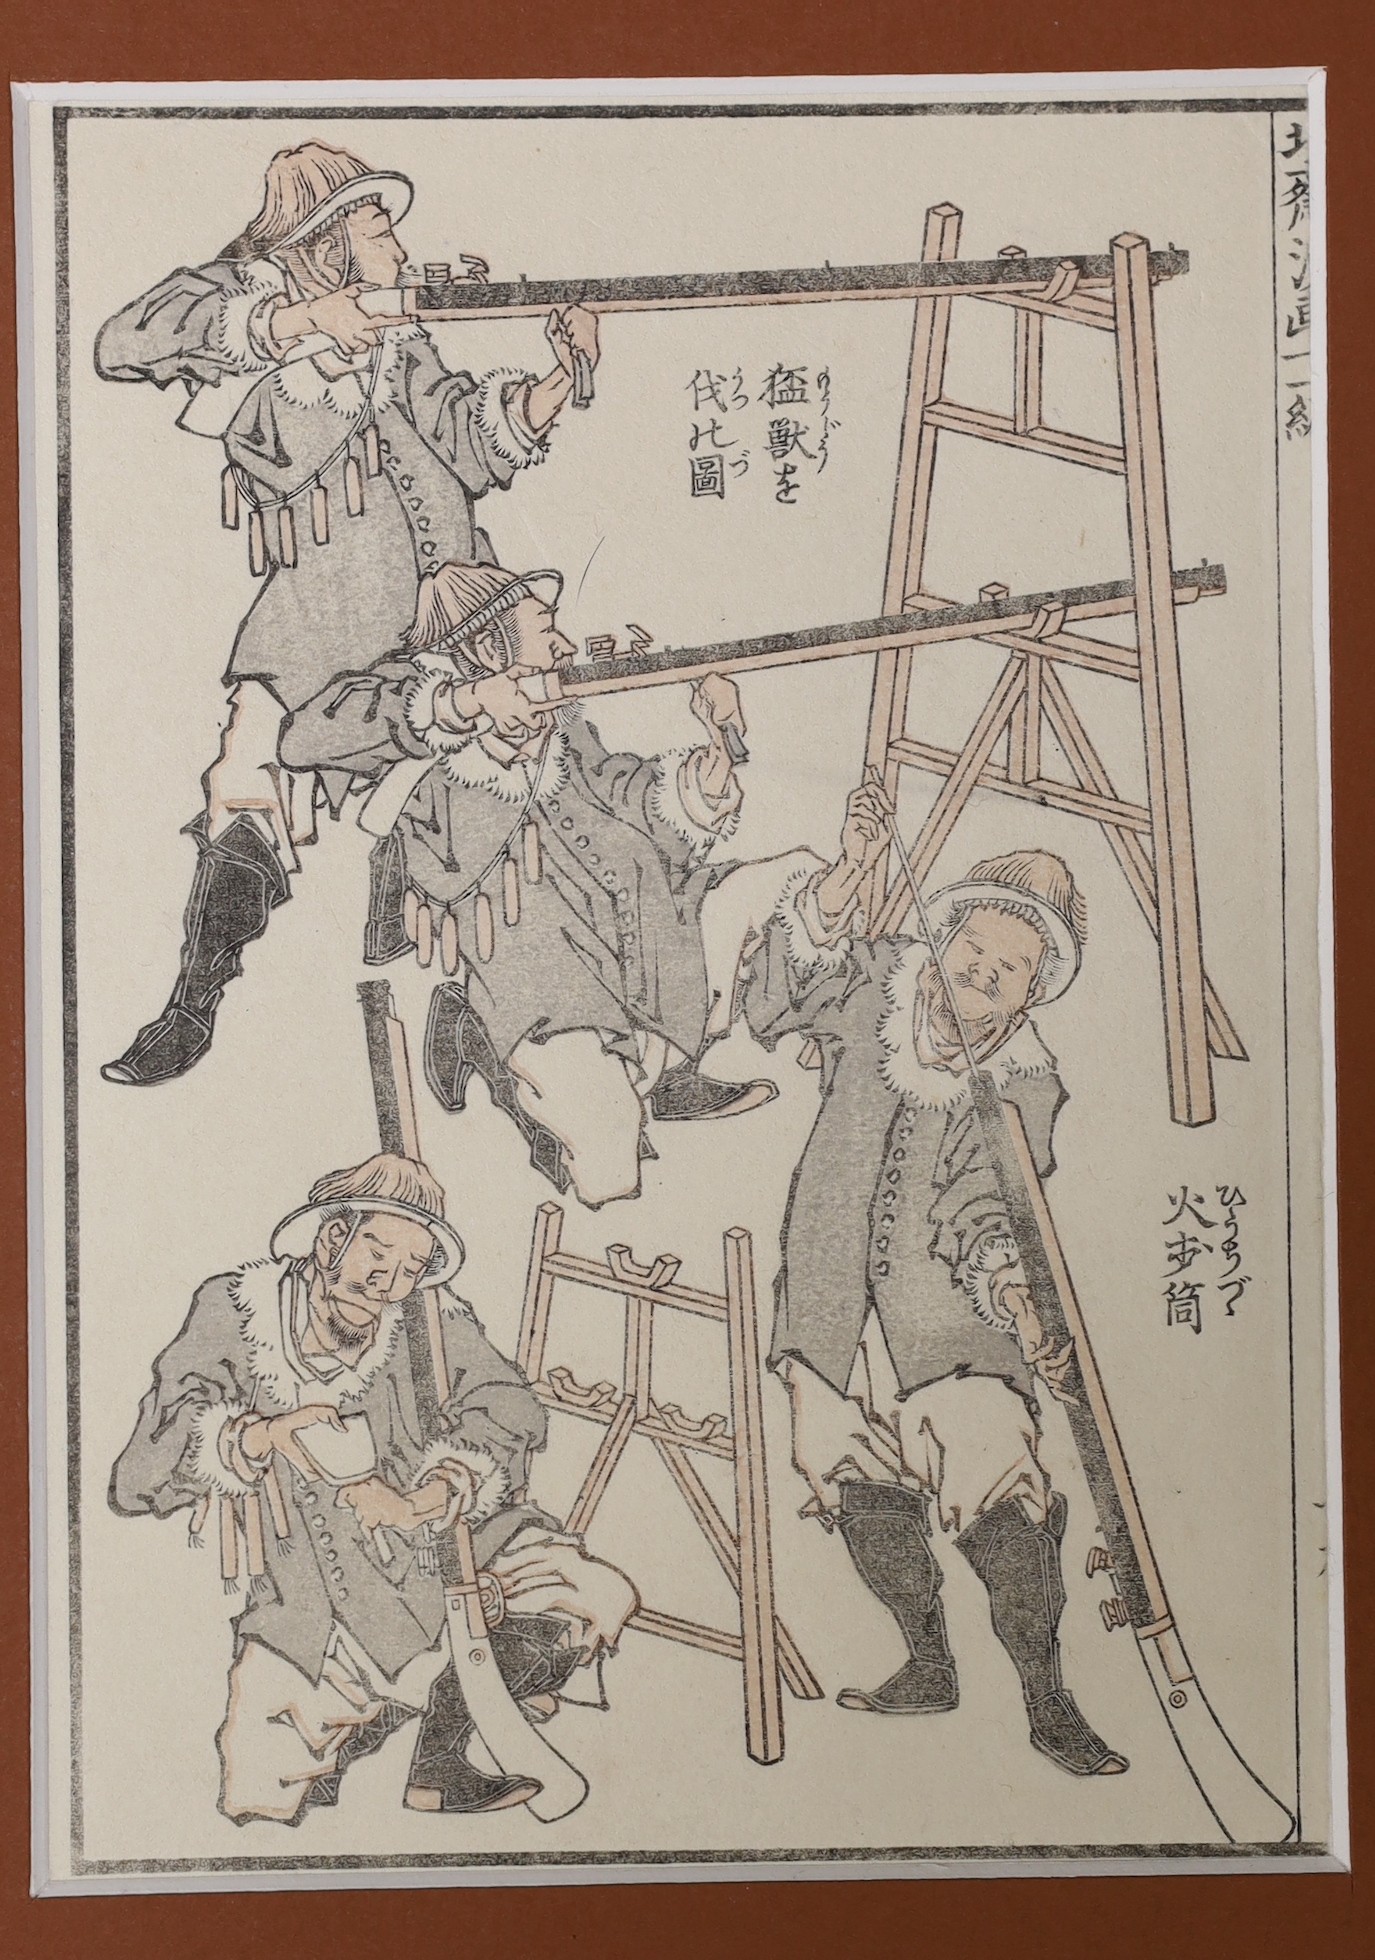 Katsushika Hokusai, four Japanese woodblock prints, Warriors with matchlock rifles, archers and wrestlers, 18 x 13cm, unframed